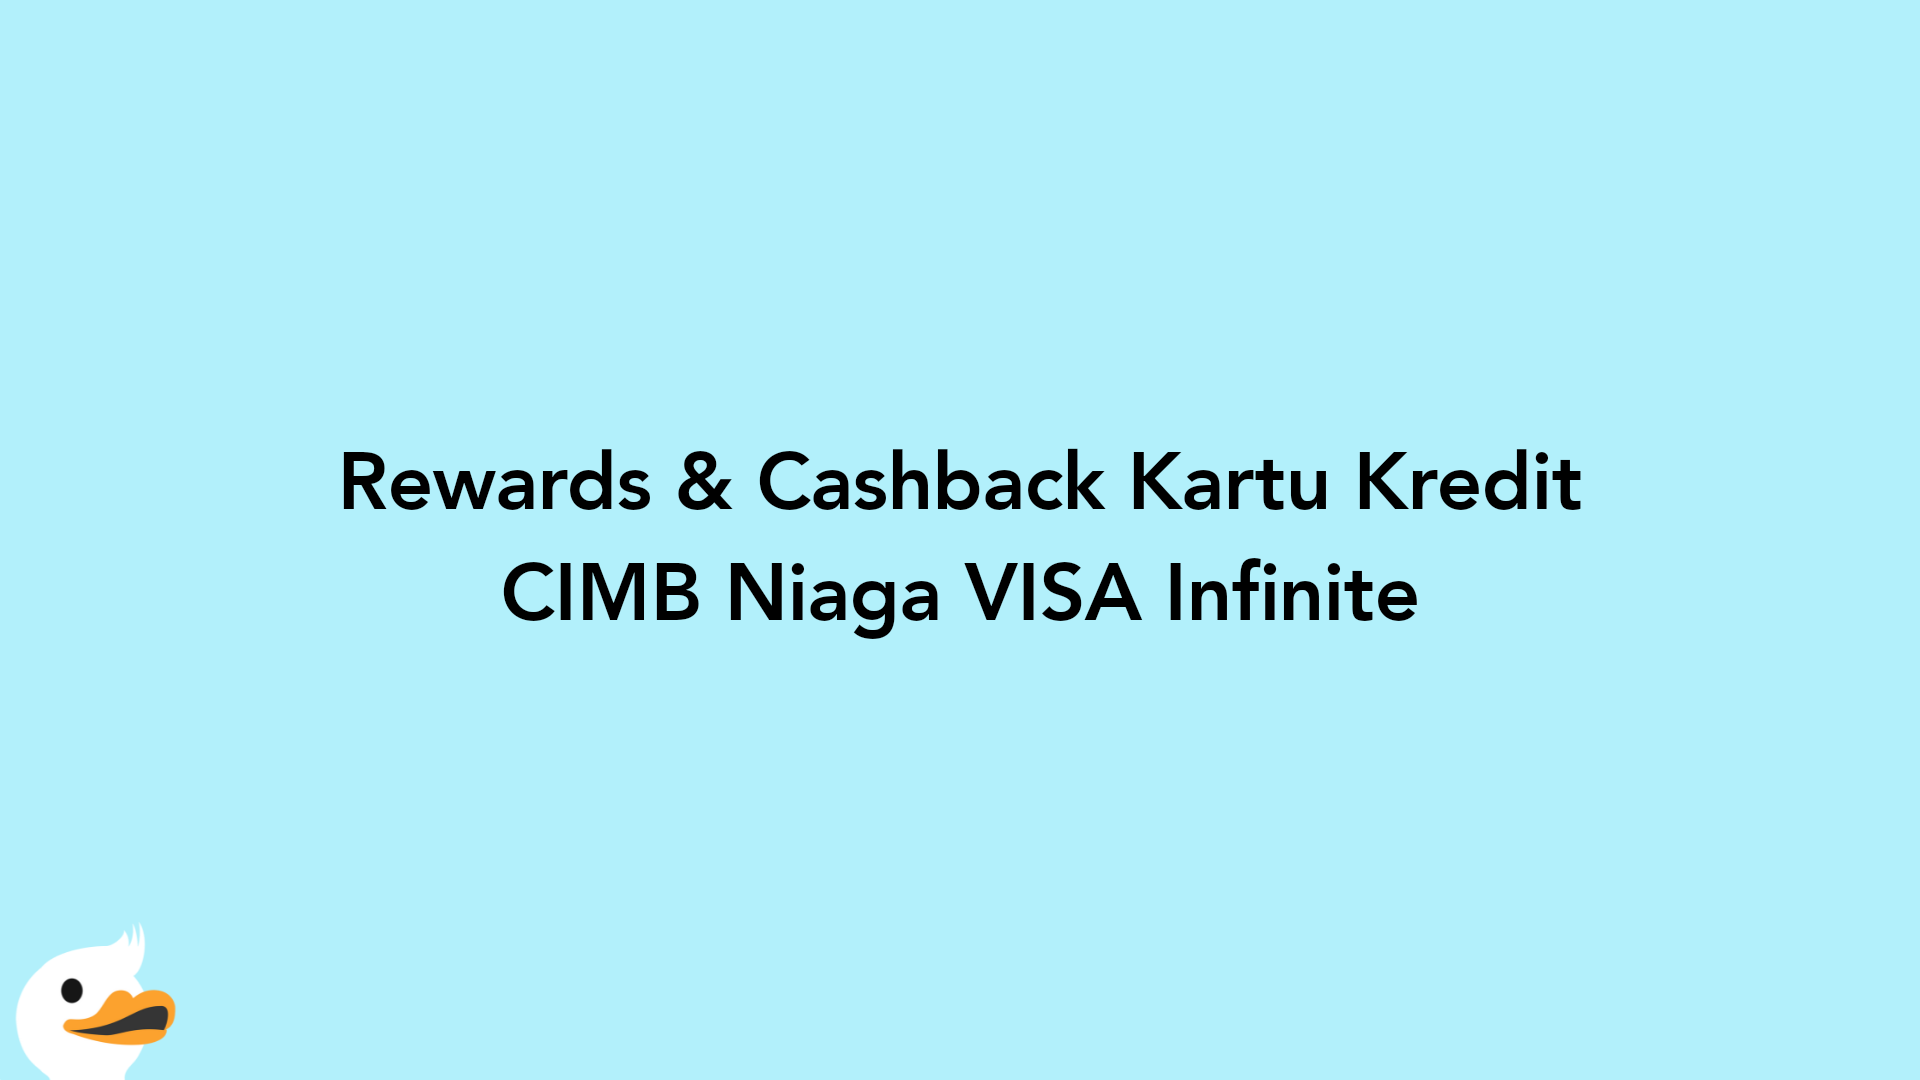 Rewards & Cashback Kartu Kredit CIMB Niaga VISA Infinite